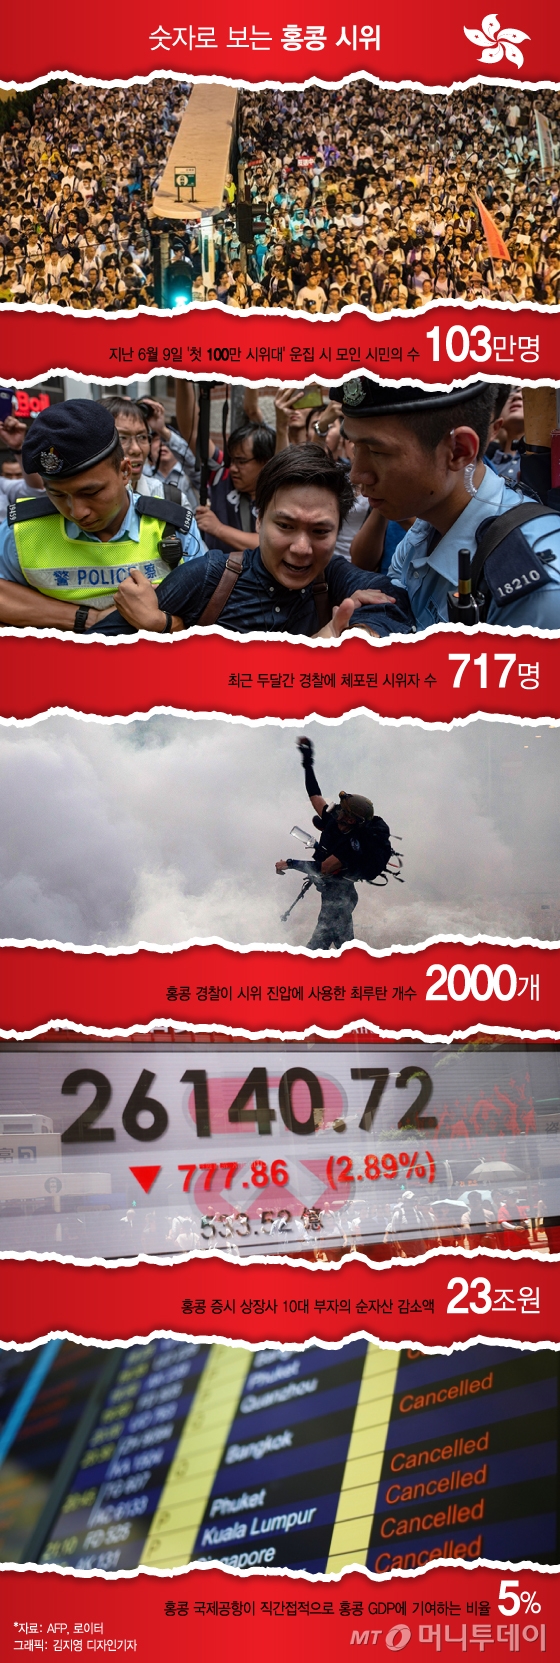 [MT리포트] "세계경제 큰 충격"…'홍콩 시위' 中 무력진압 가능성은?